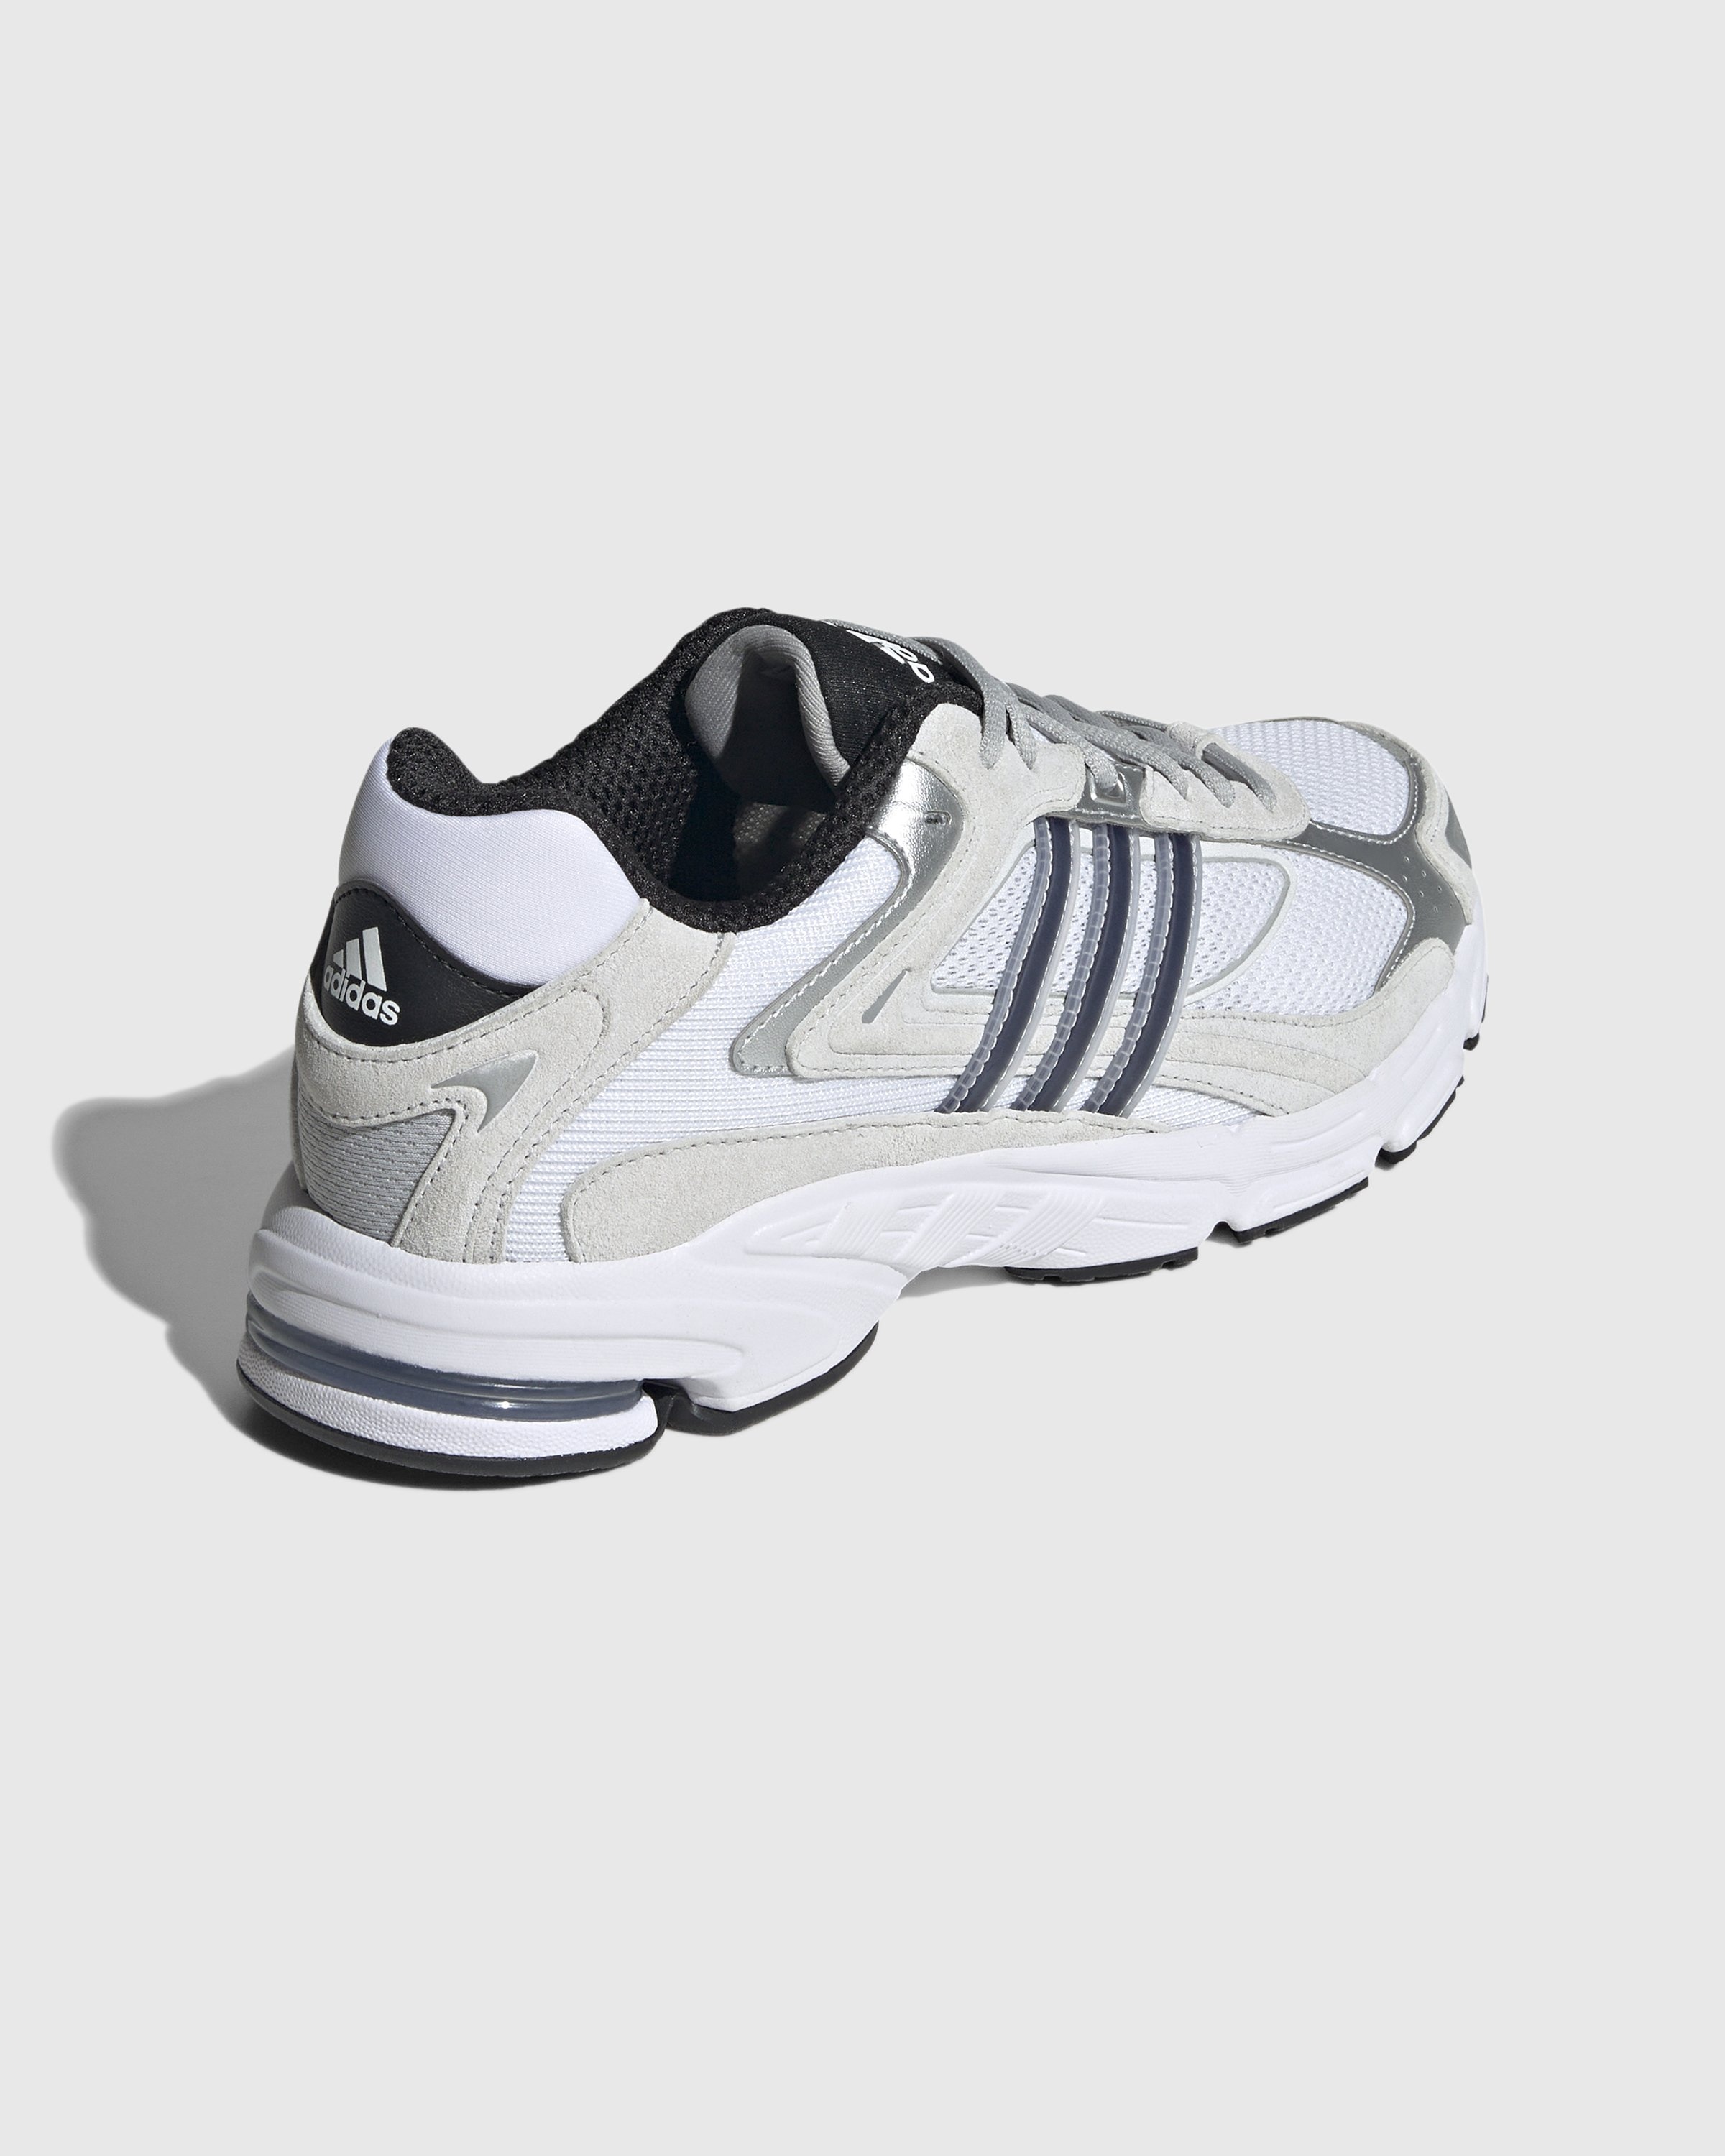 Adidas – Response CL White/Black | Highsnobiety Shop | 